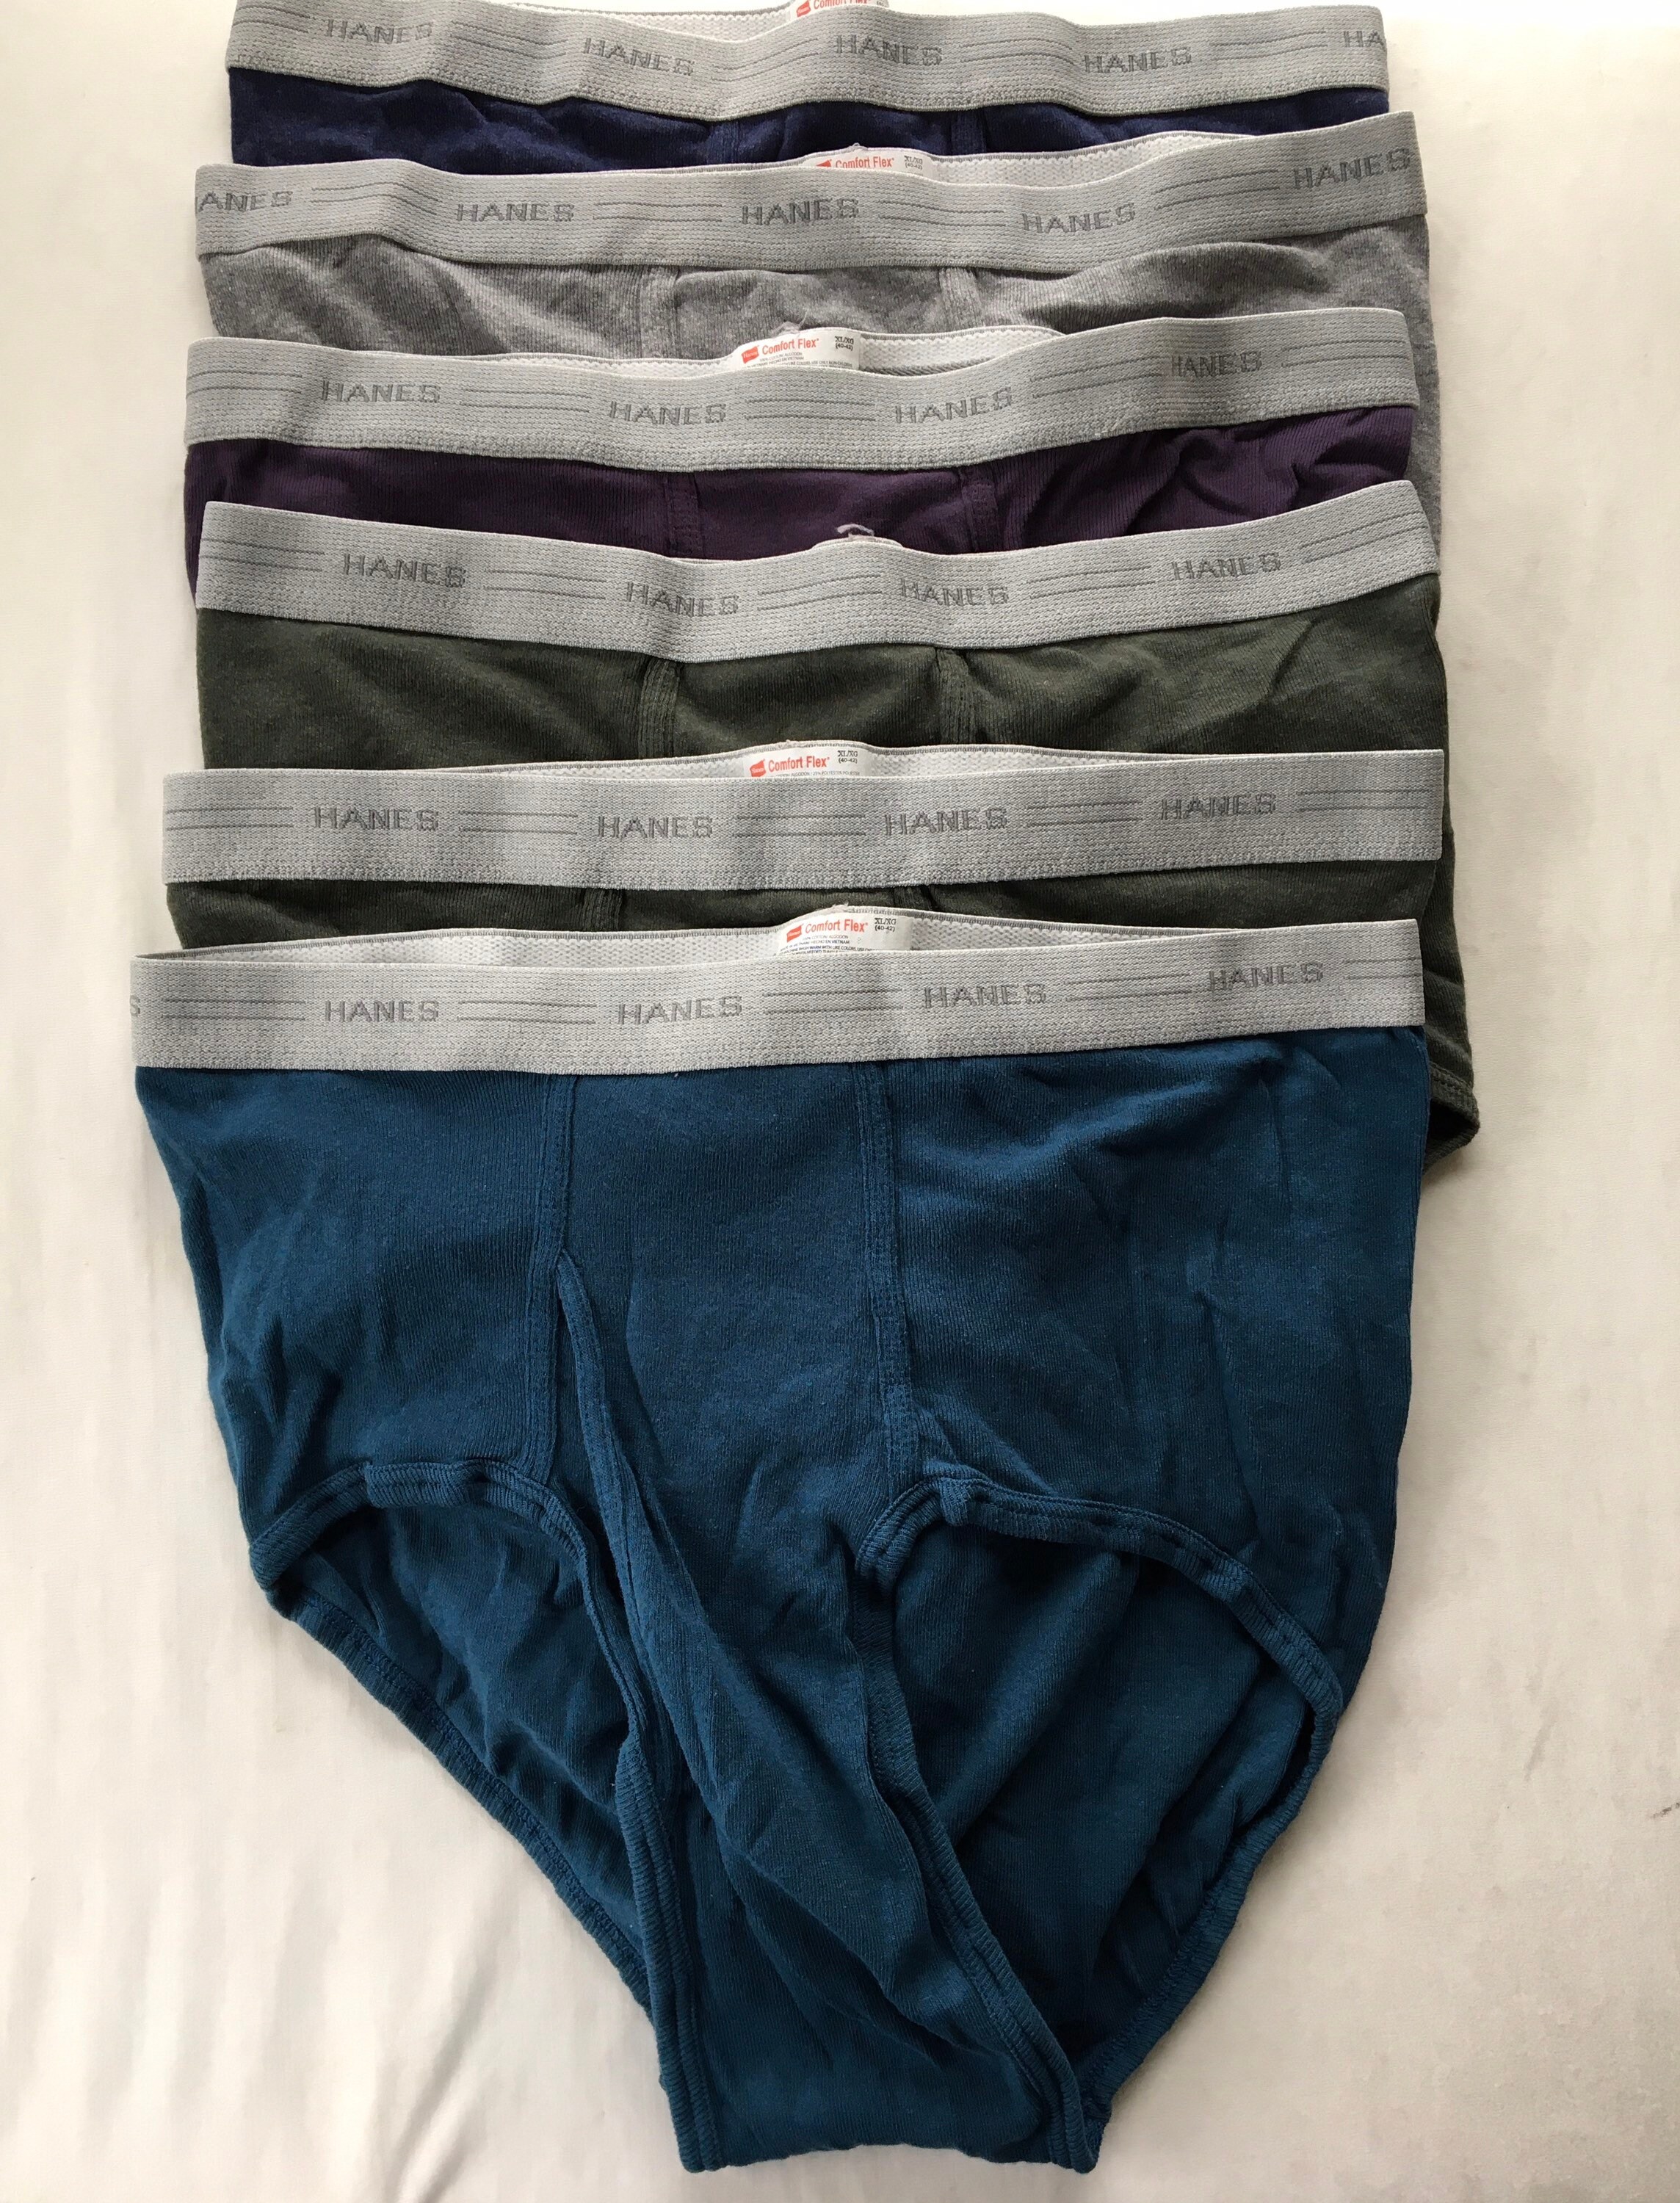 Vintage Hanes Briefs Polycotton Underwear Multi Colored Mens Size XL 40-42  Lot Of 6